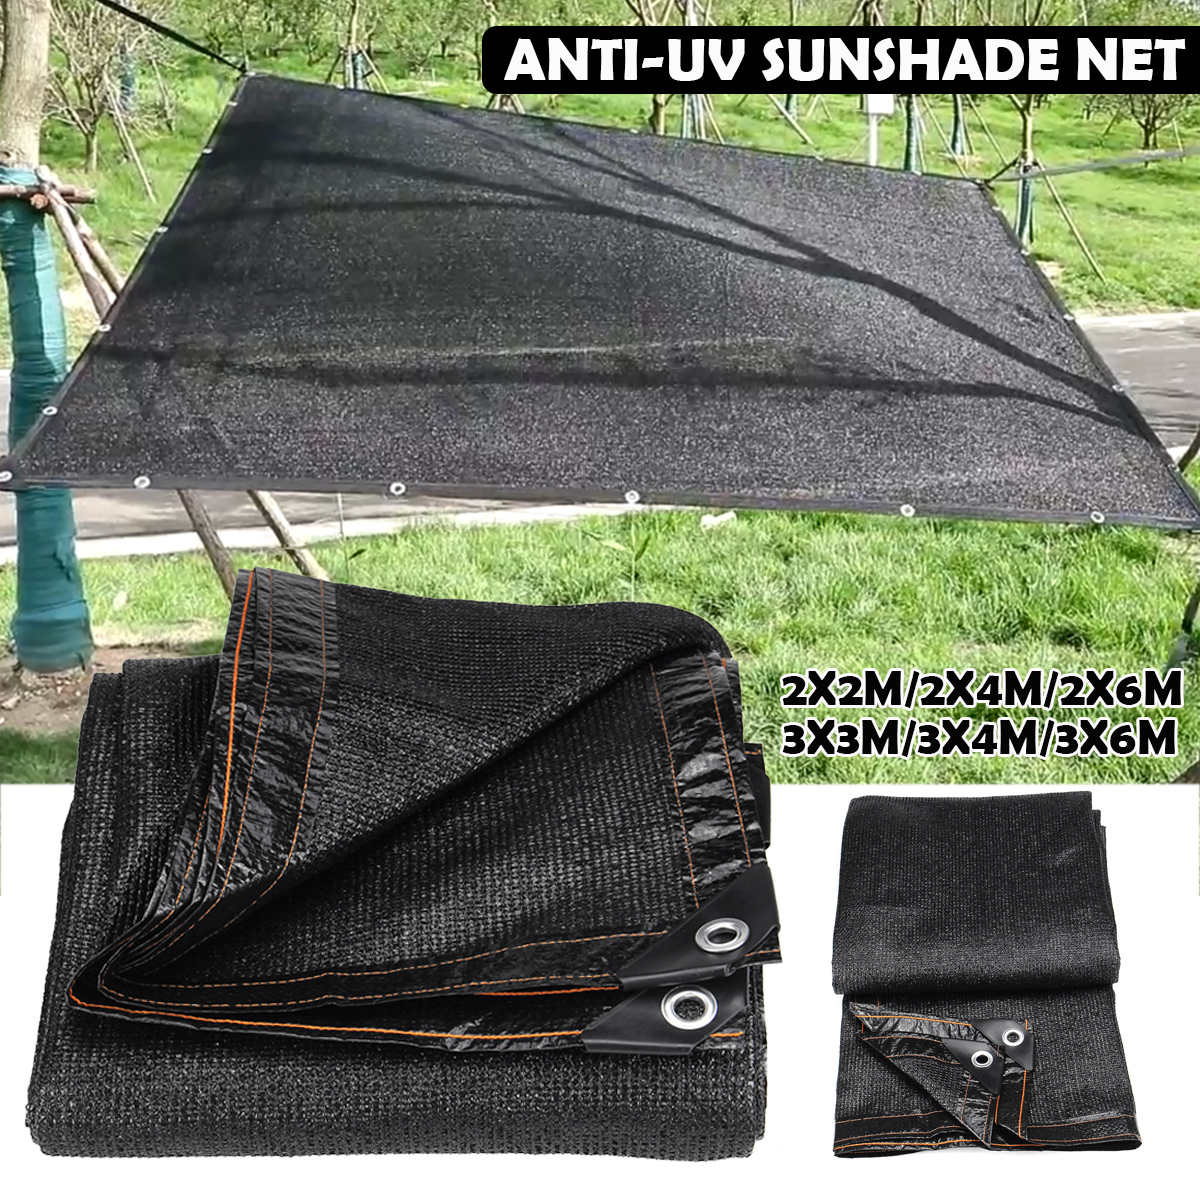 Anti-UV-Sunshade-Net-Outdoor-Garden-Sunscreen-Sunblock-Shade-Cloth-Net-Plant-Greenhouse-Cover-Car-Co-1611437-2